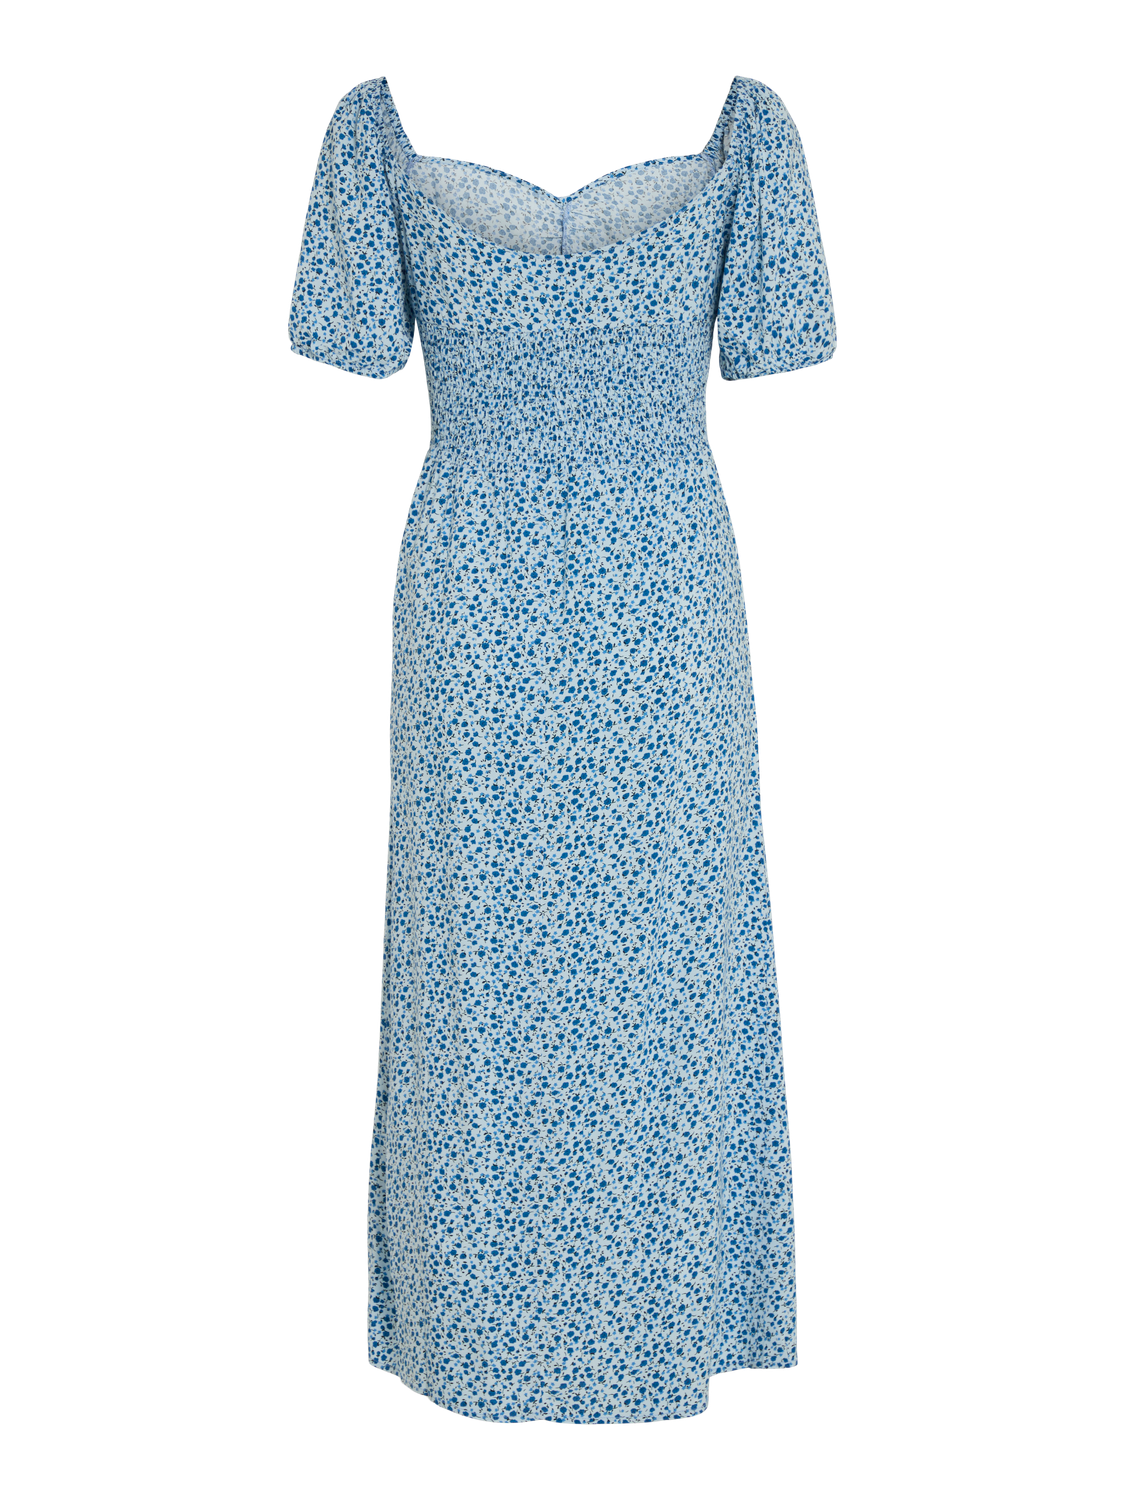 VIKATA Dress - Cashmere Blue